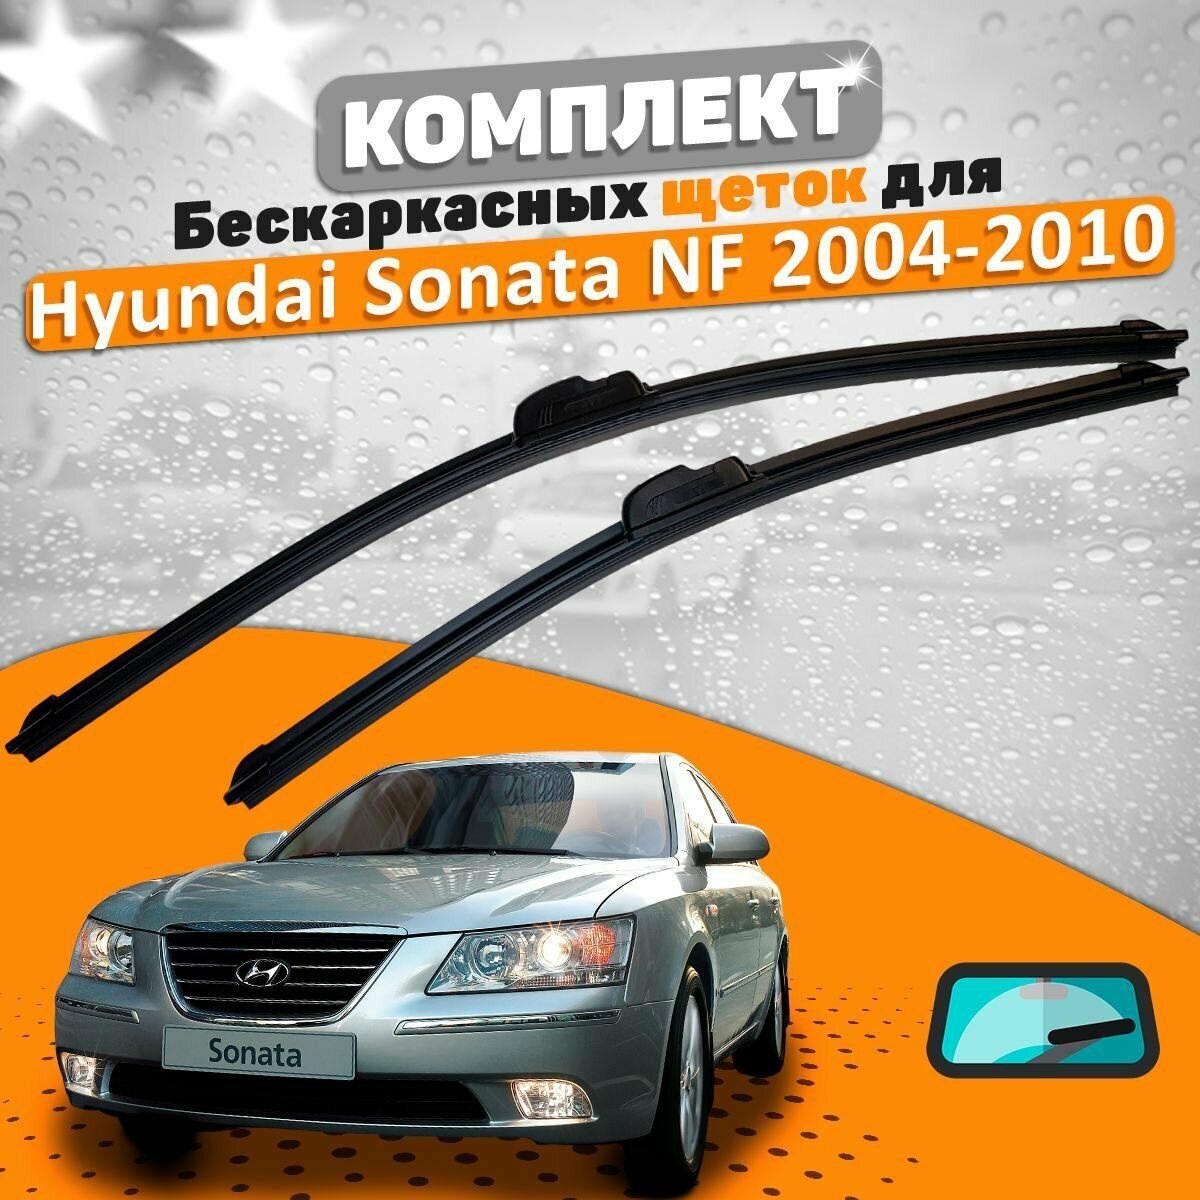 Щетки комплект Hyundai Sonata NF 2004-2010 (600 и 500 мм) / Дворники Хундай Соната НФ